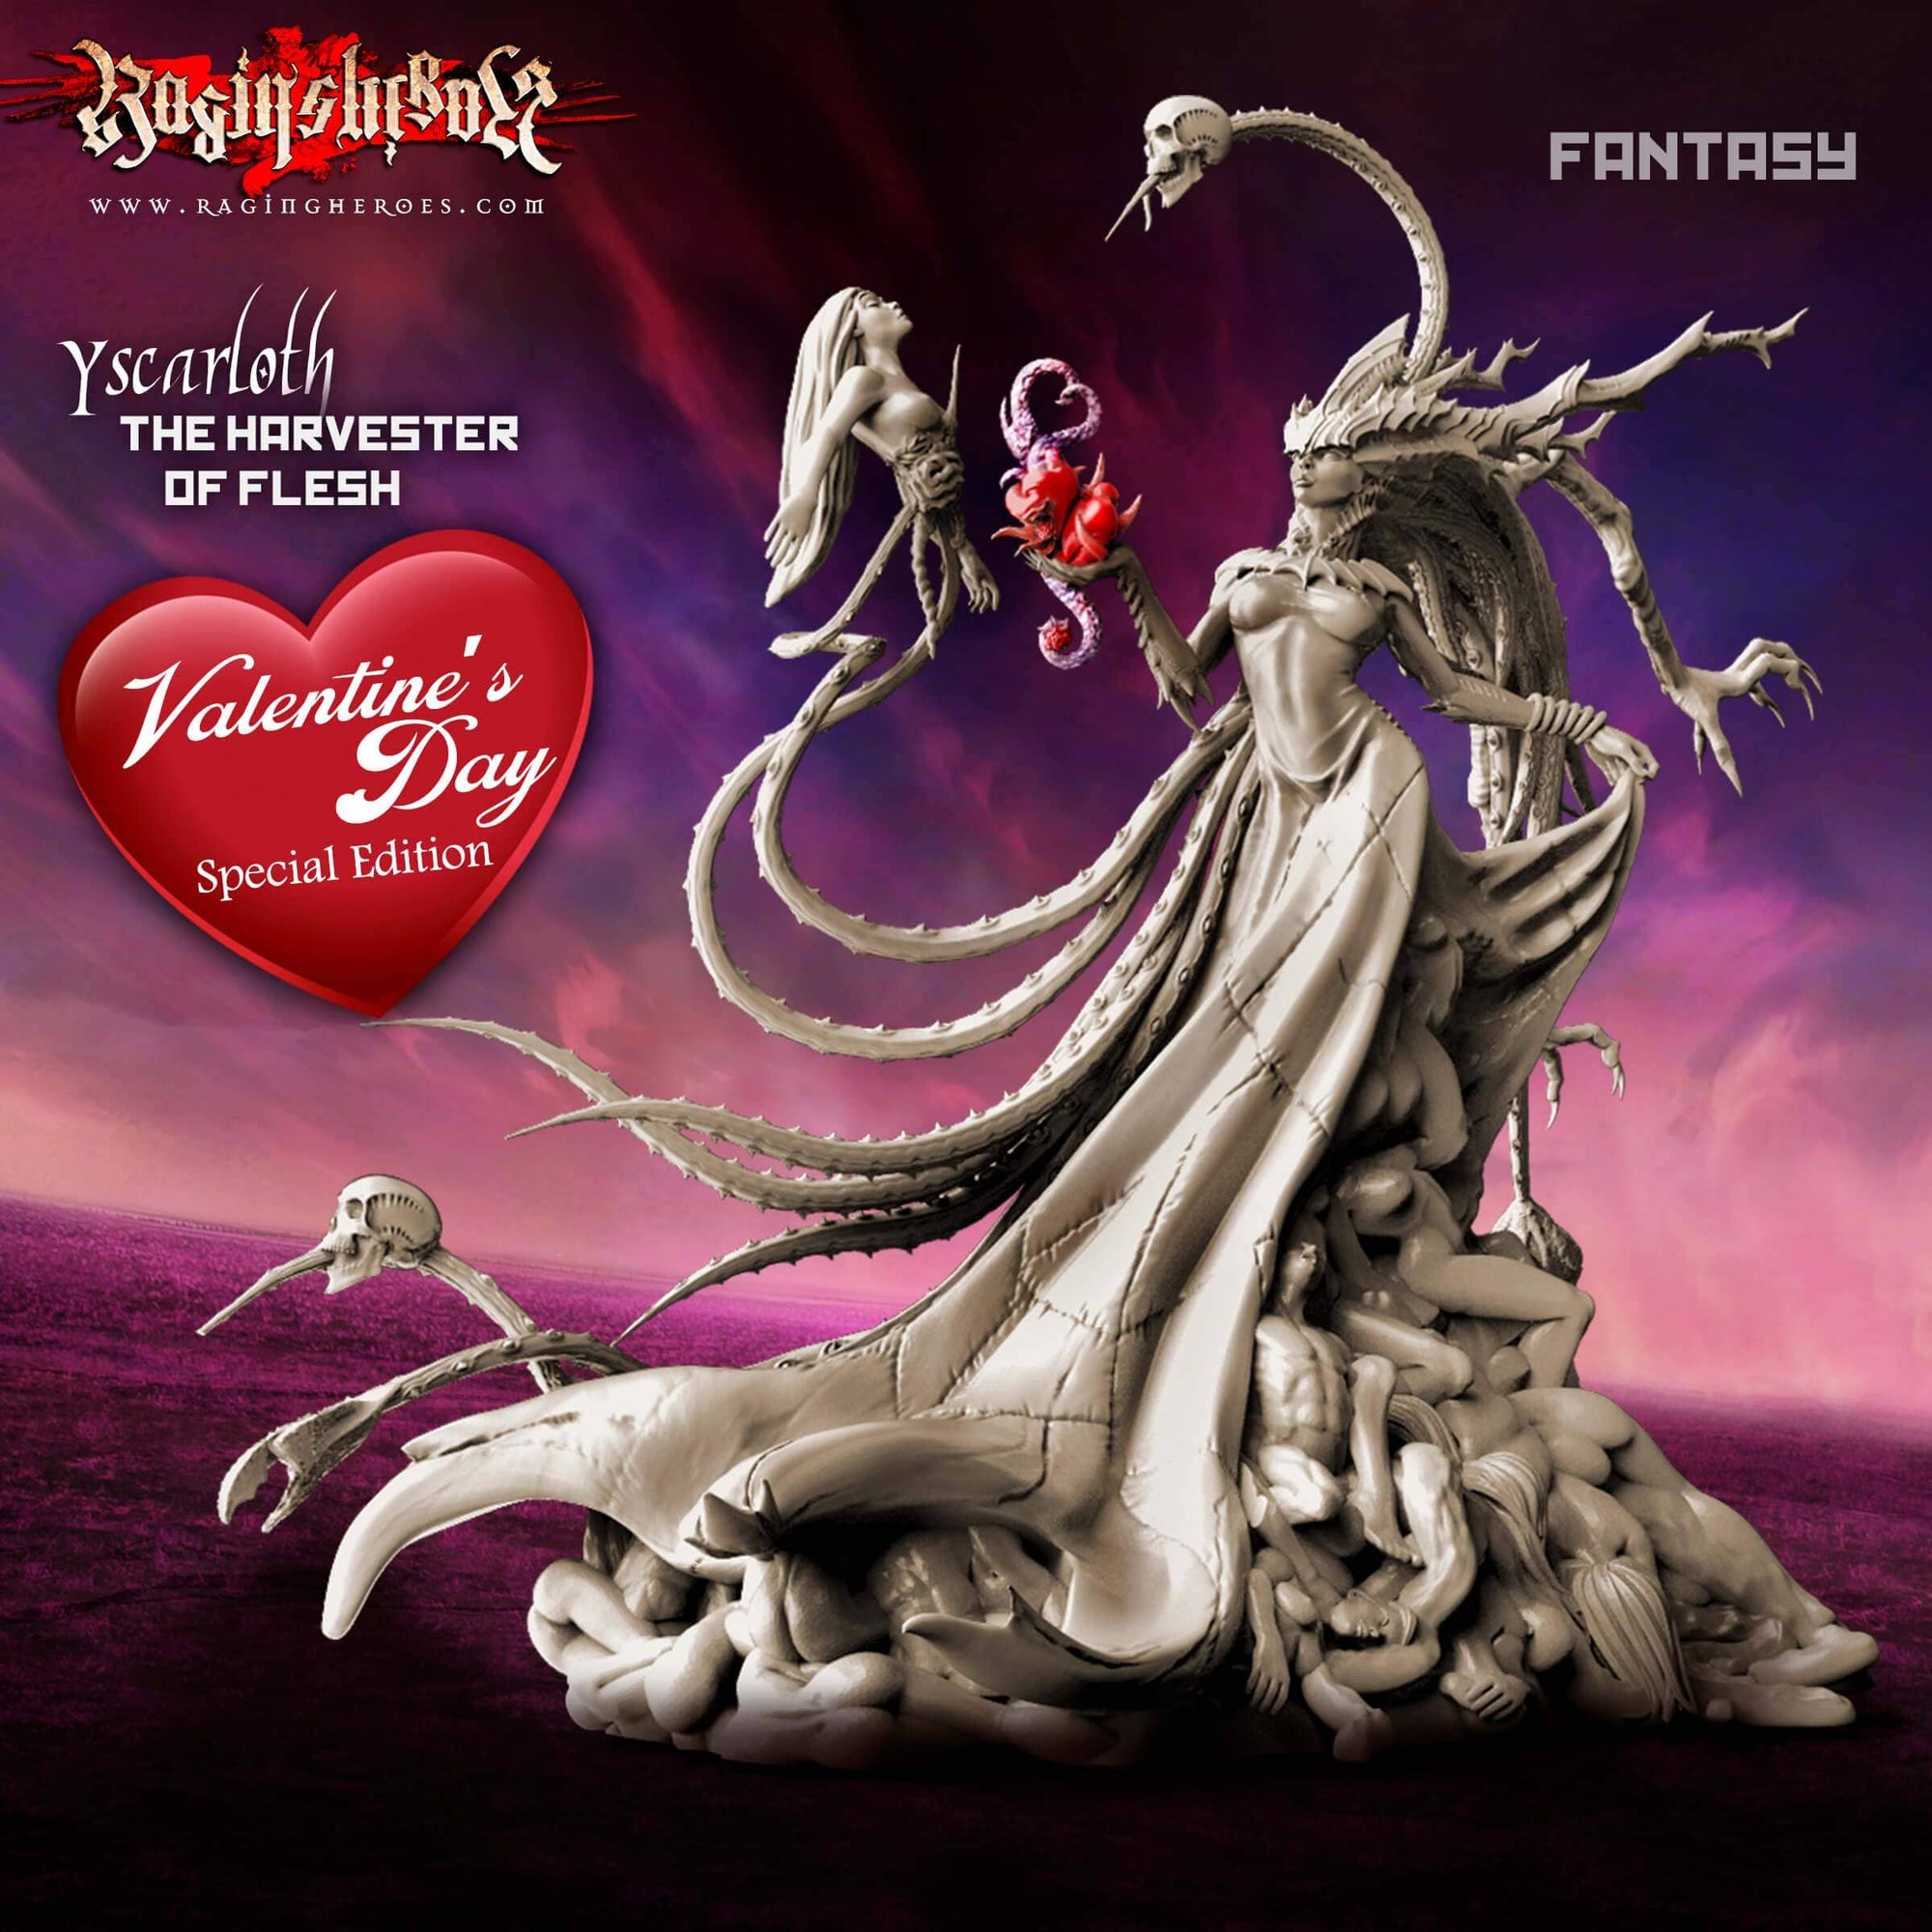 Yscarloth, The Harvester of Fesh, Valentinstag Special Edition Fantasy -Version (Le - F)